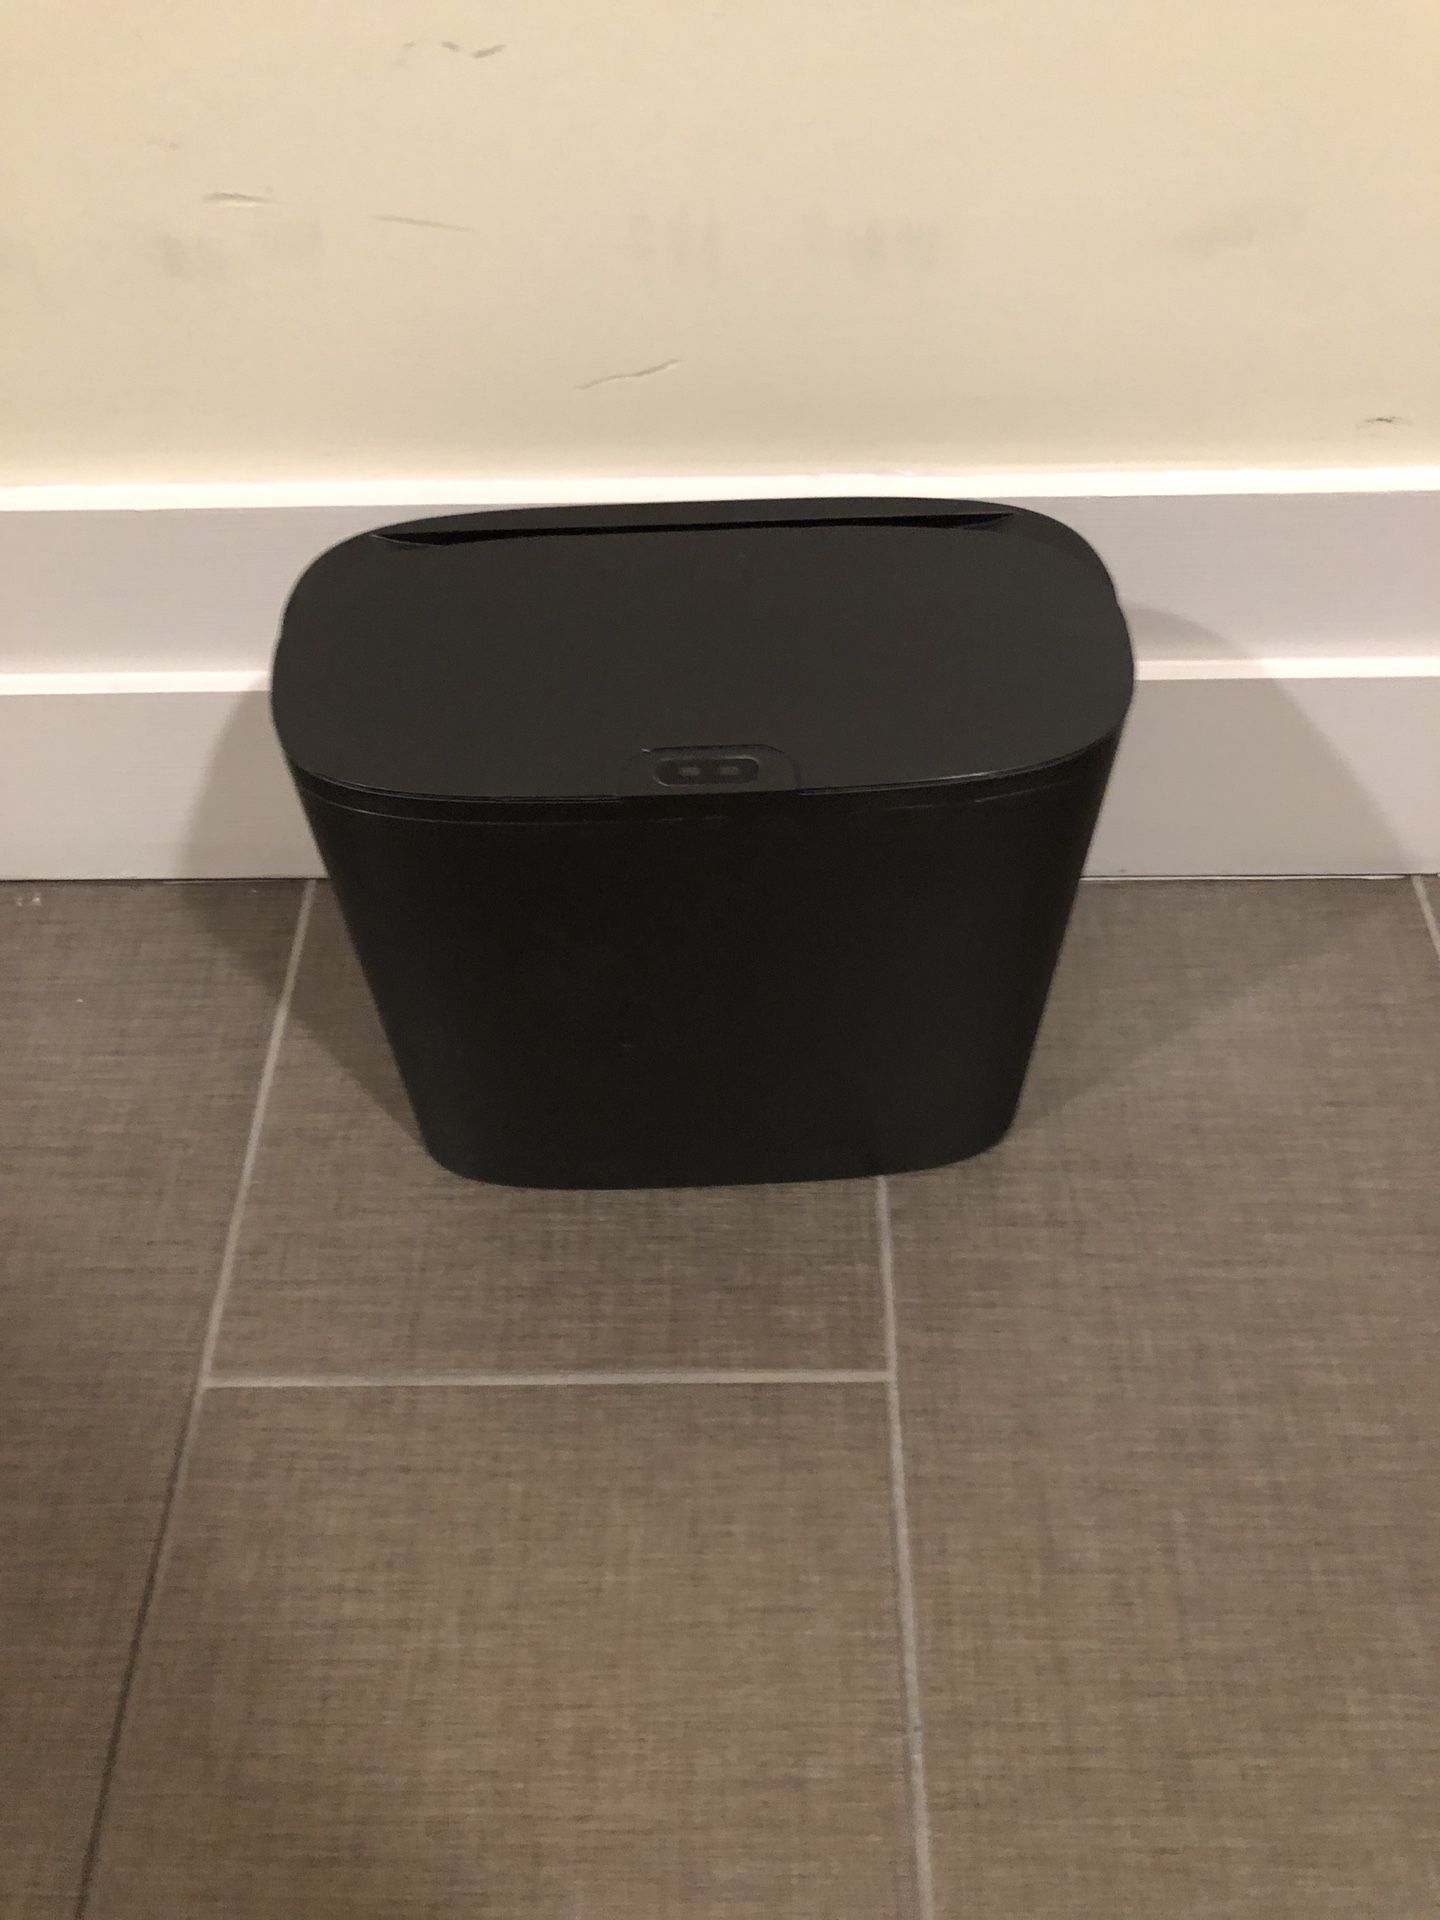 ELPHECO Bathroom Trash Can, 2.5 Gallon Waterproof Motion Sensor Small with Lids